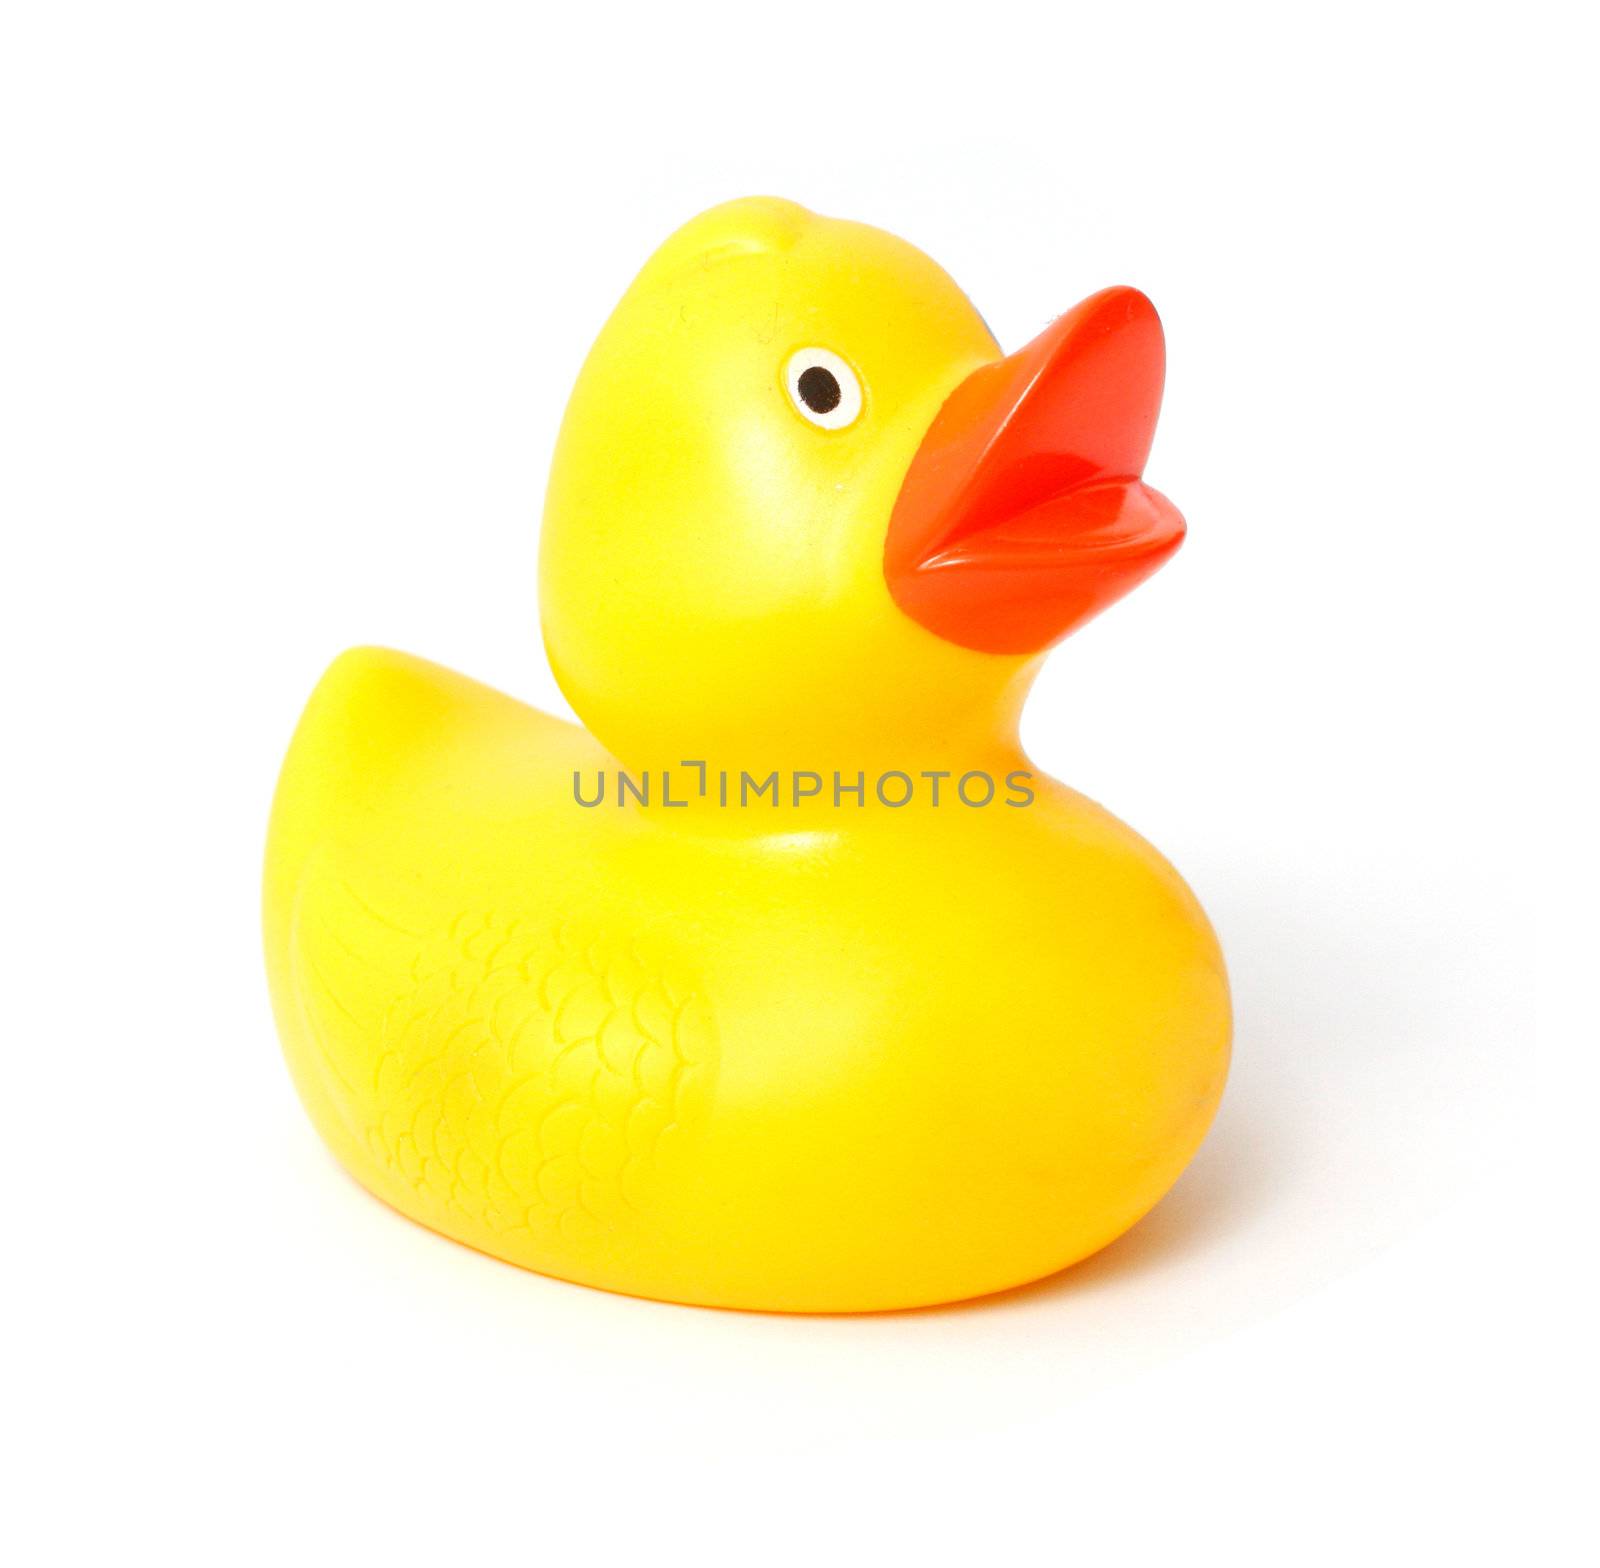 Rubber duck by leeser